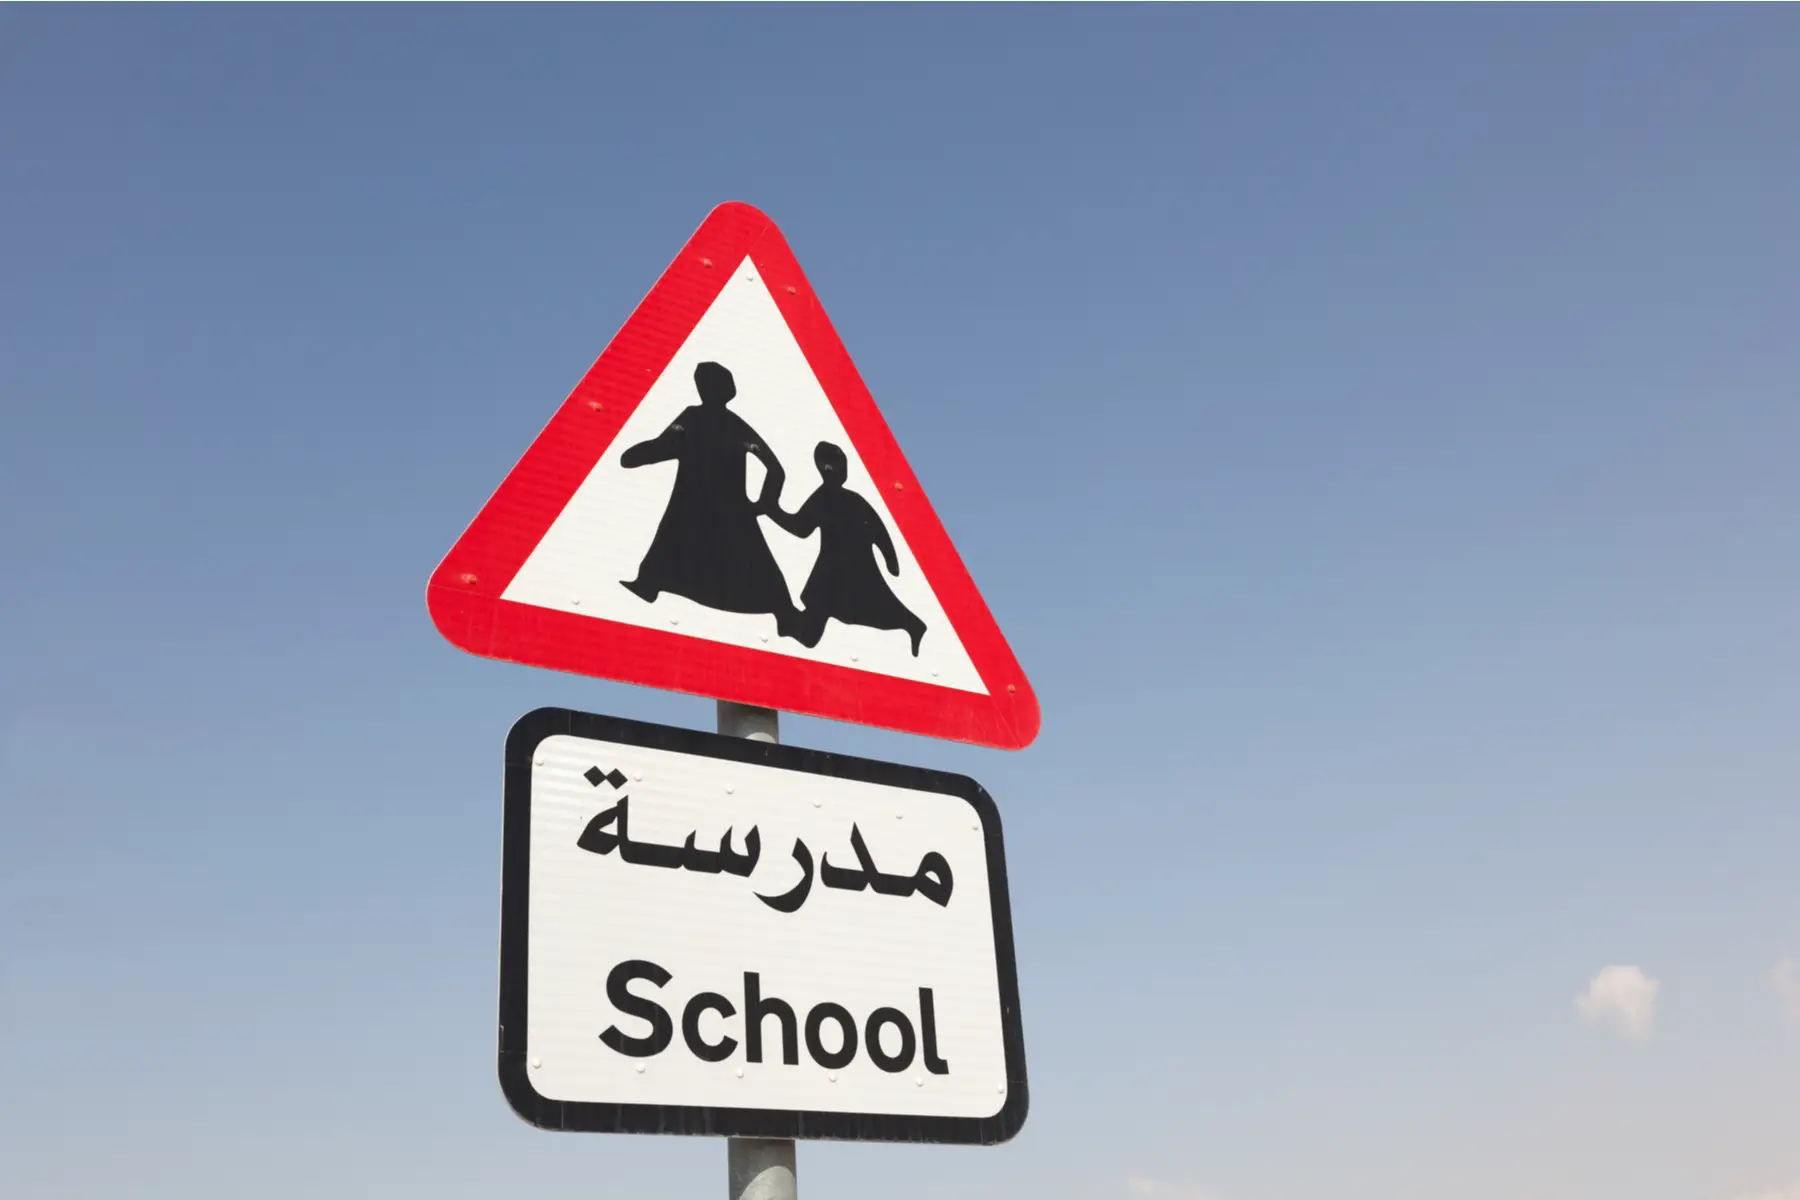 Road signs in Qatar